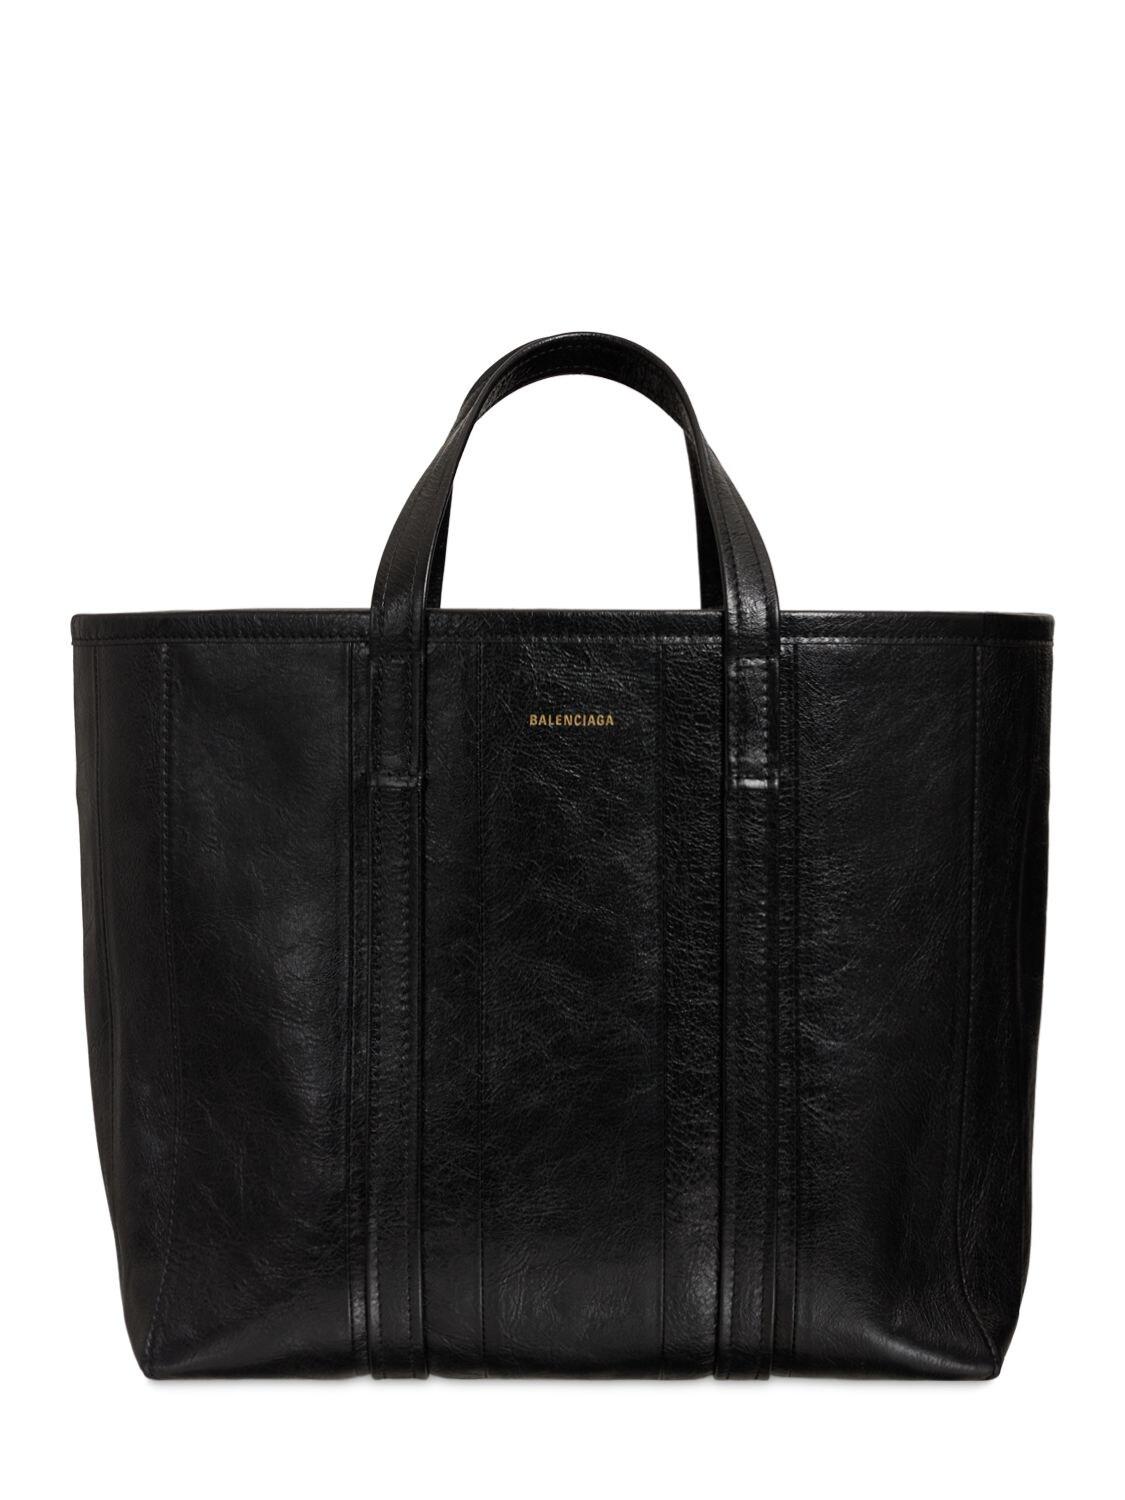 Balenciaga Medium Barbes Leather Tote Bag in Black | Lyst